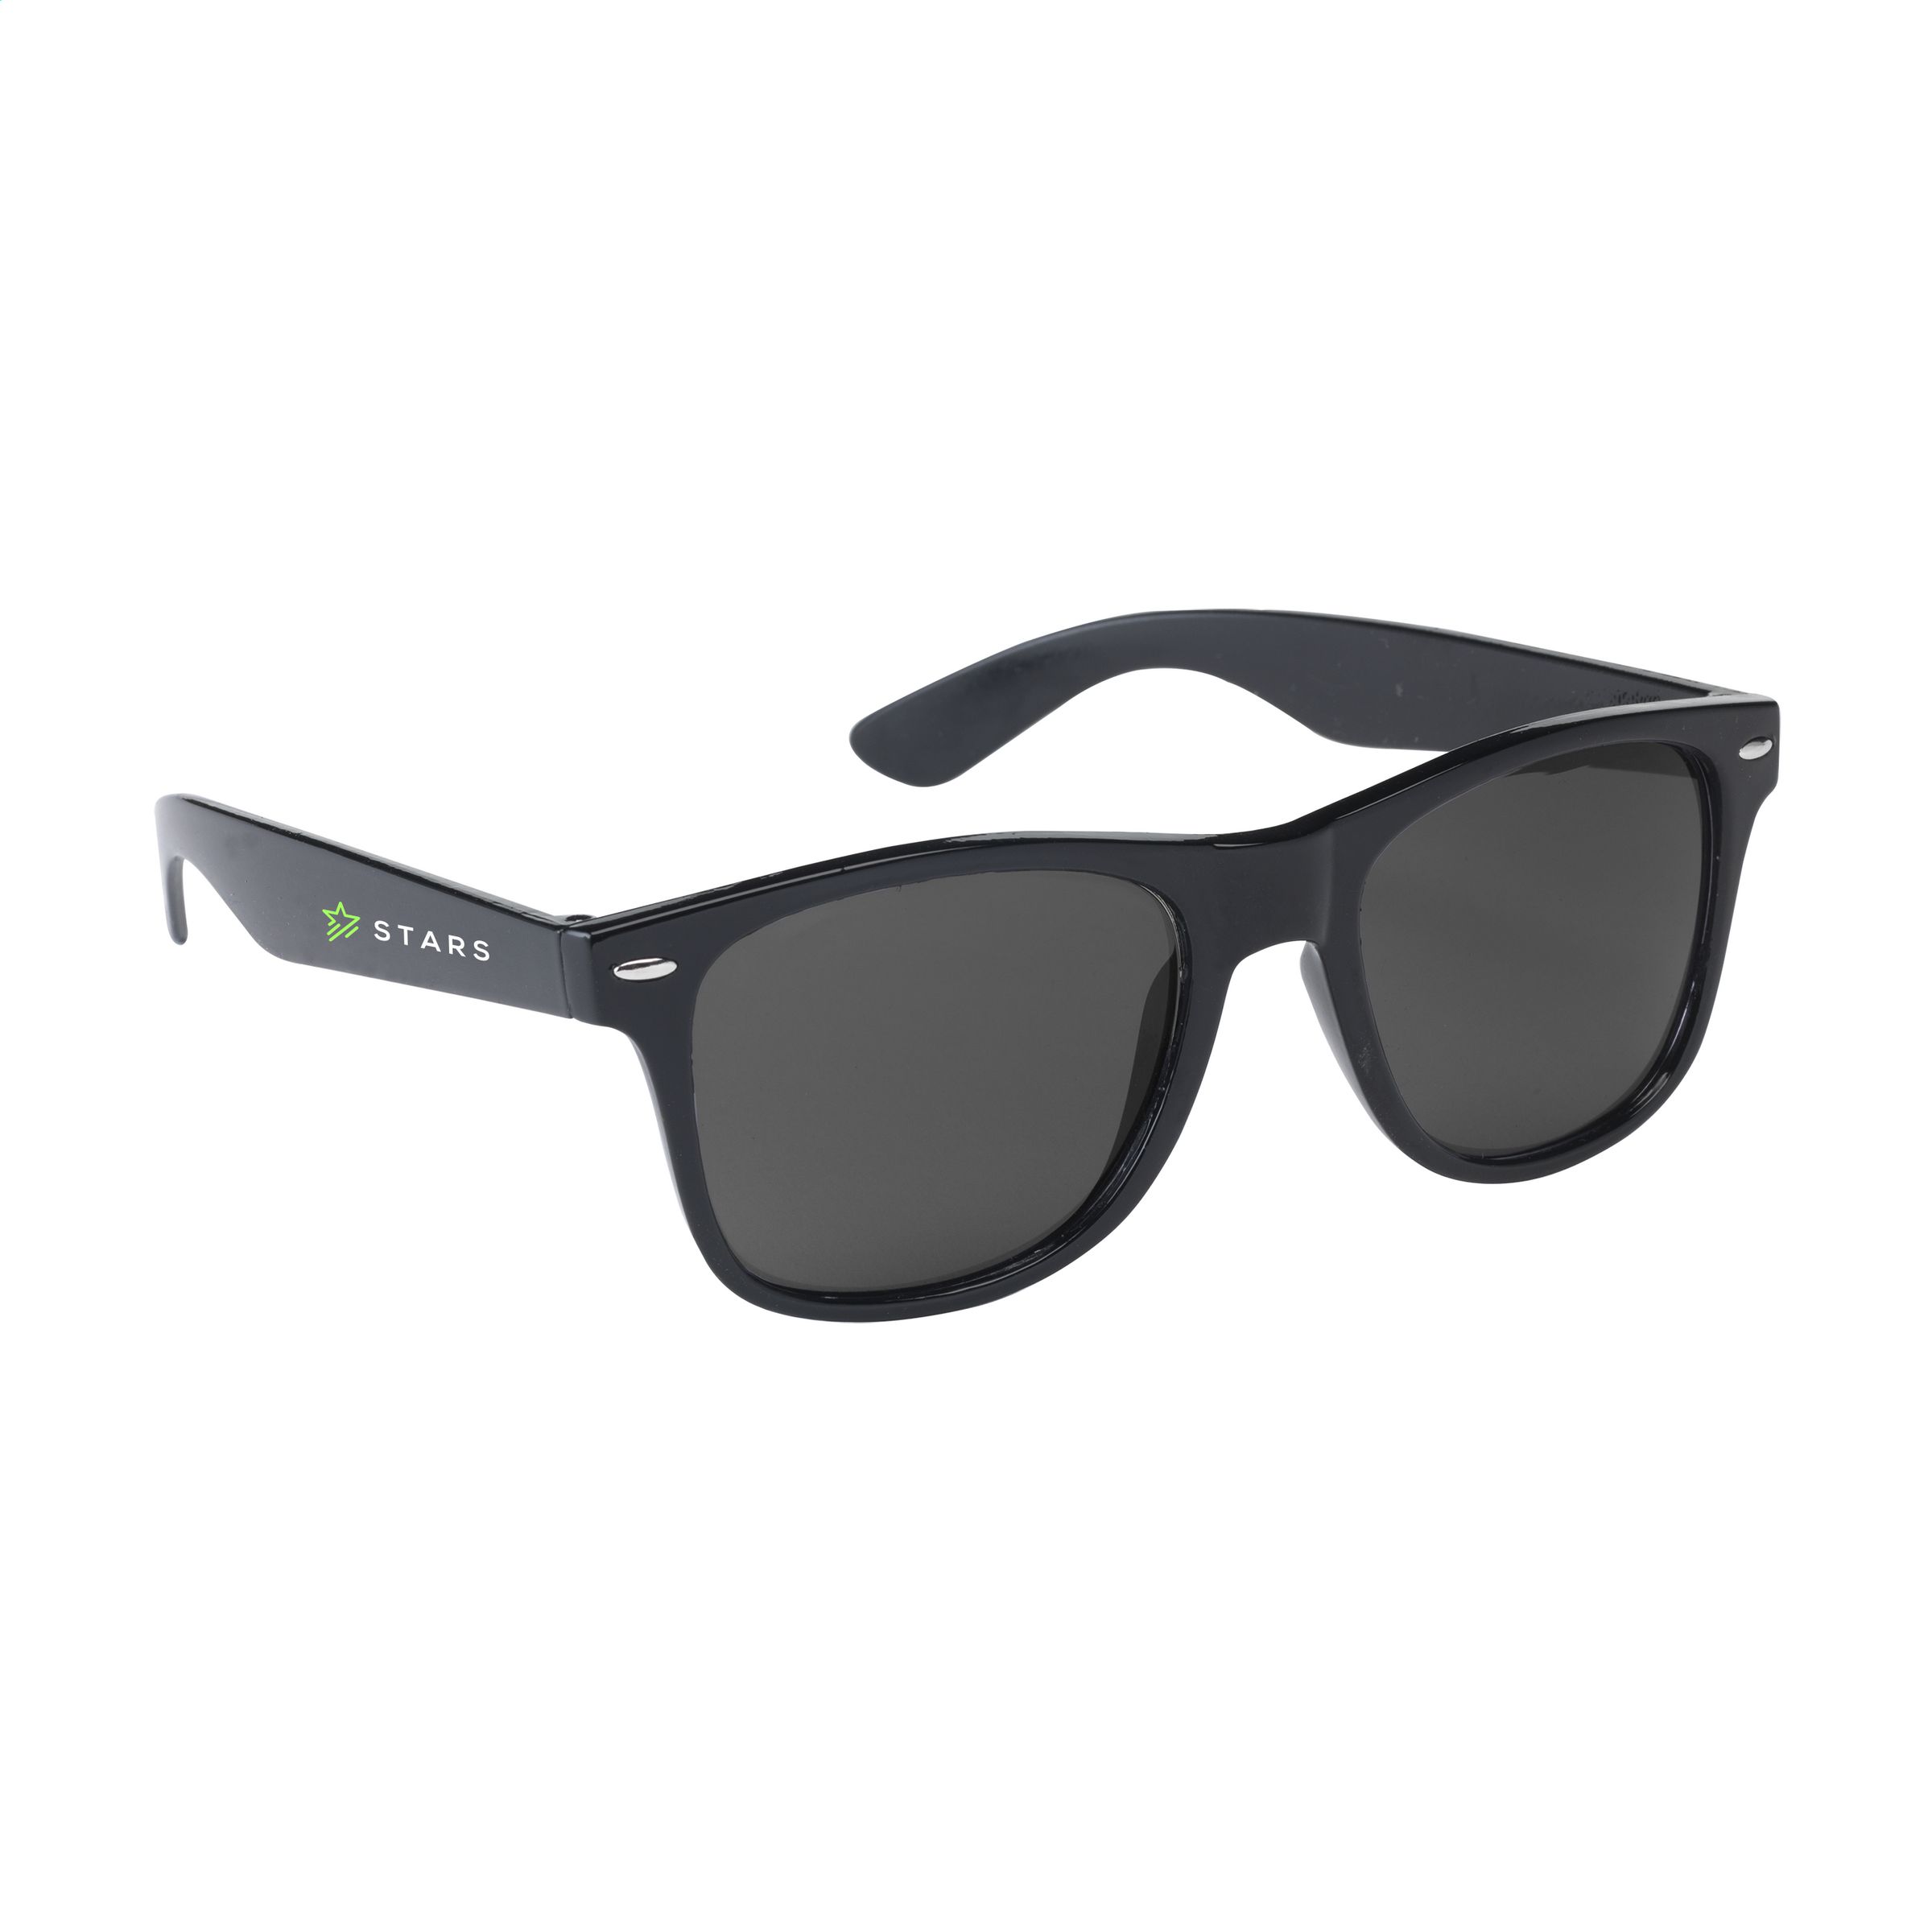 Malibu RPET sunglasses